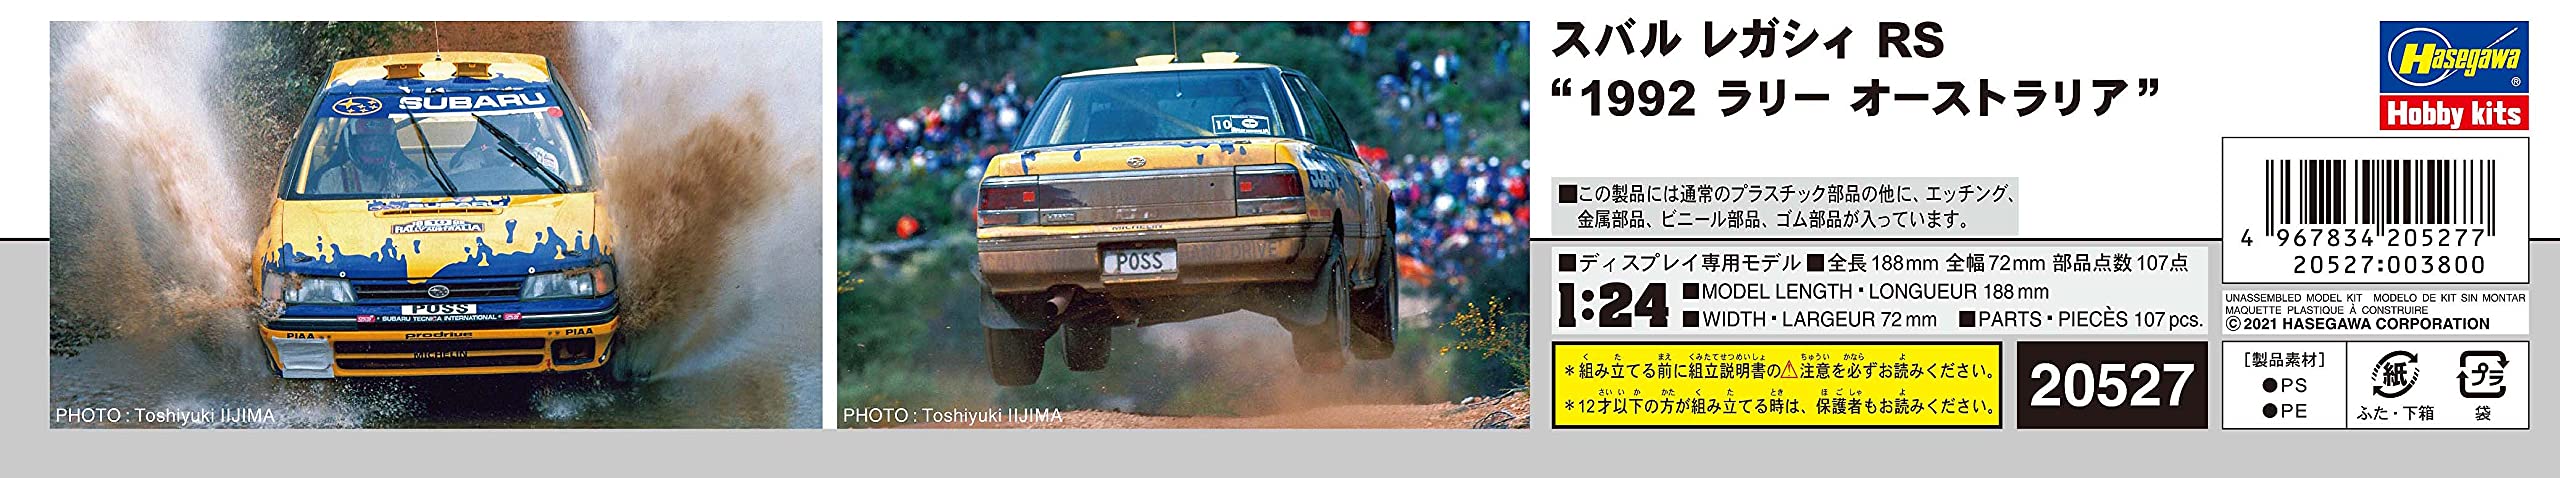 HASEGAWA 1/24 Subaru Legacy Rs '1992 Rally Australia' Plastikmodell